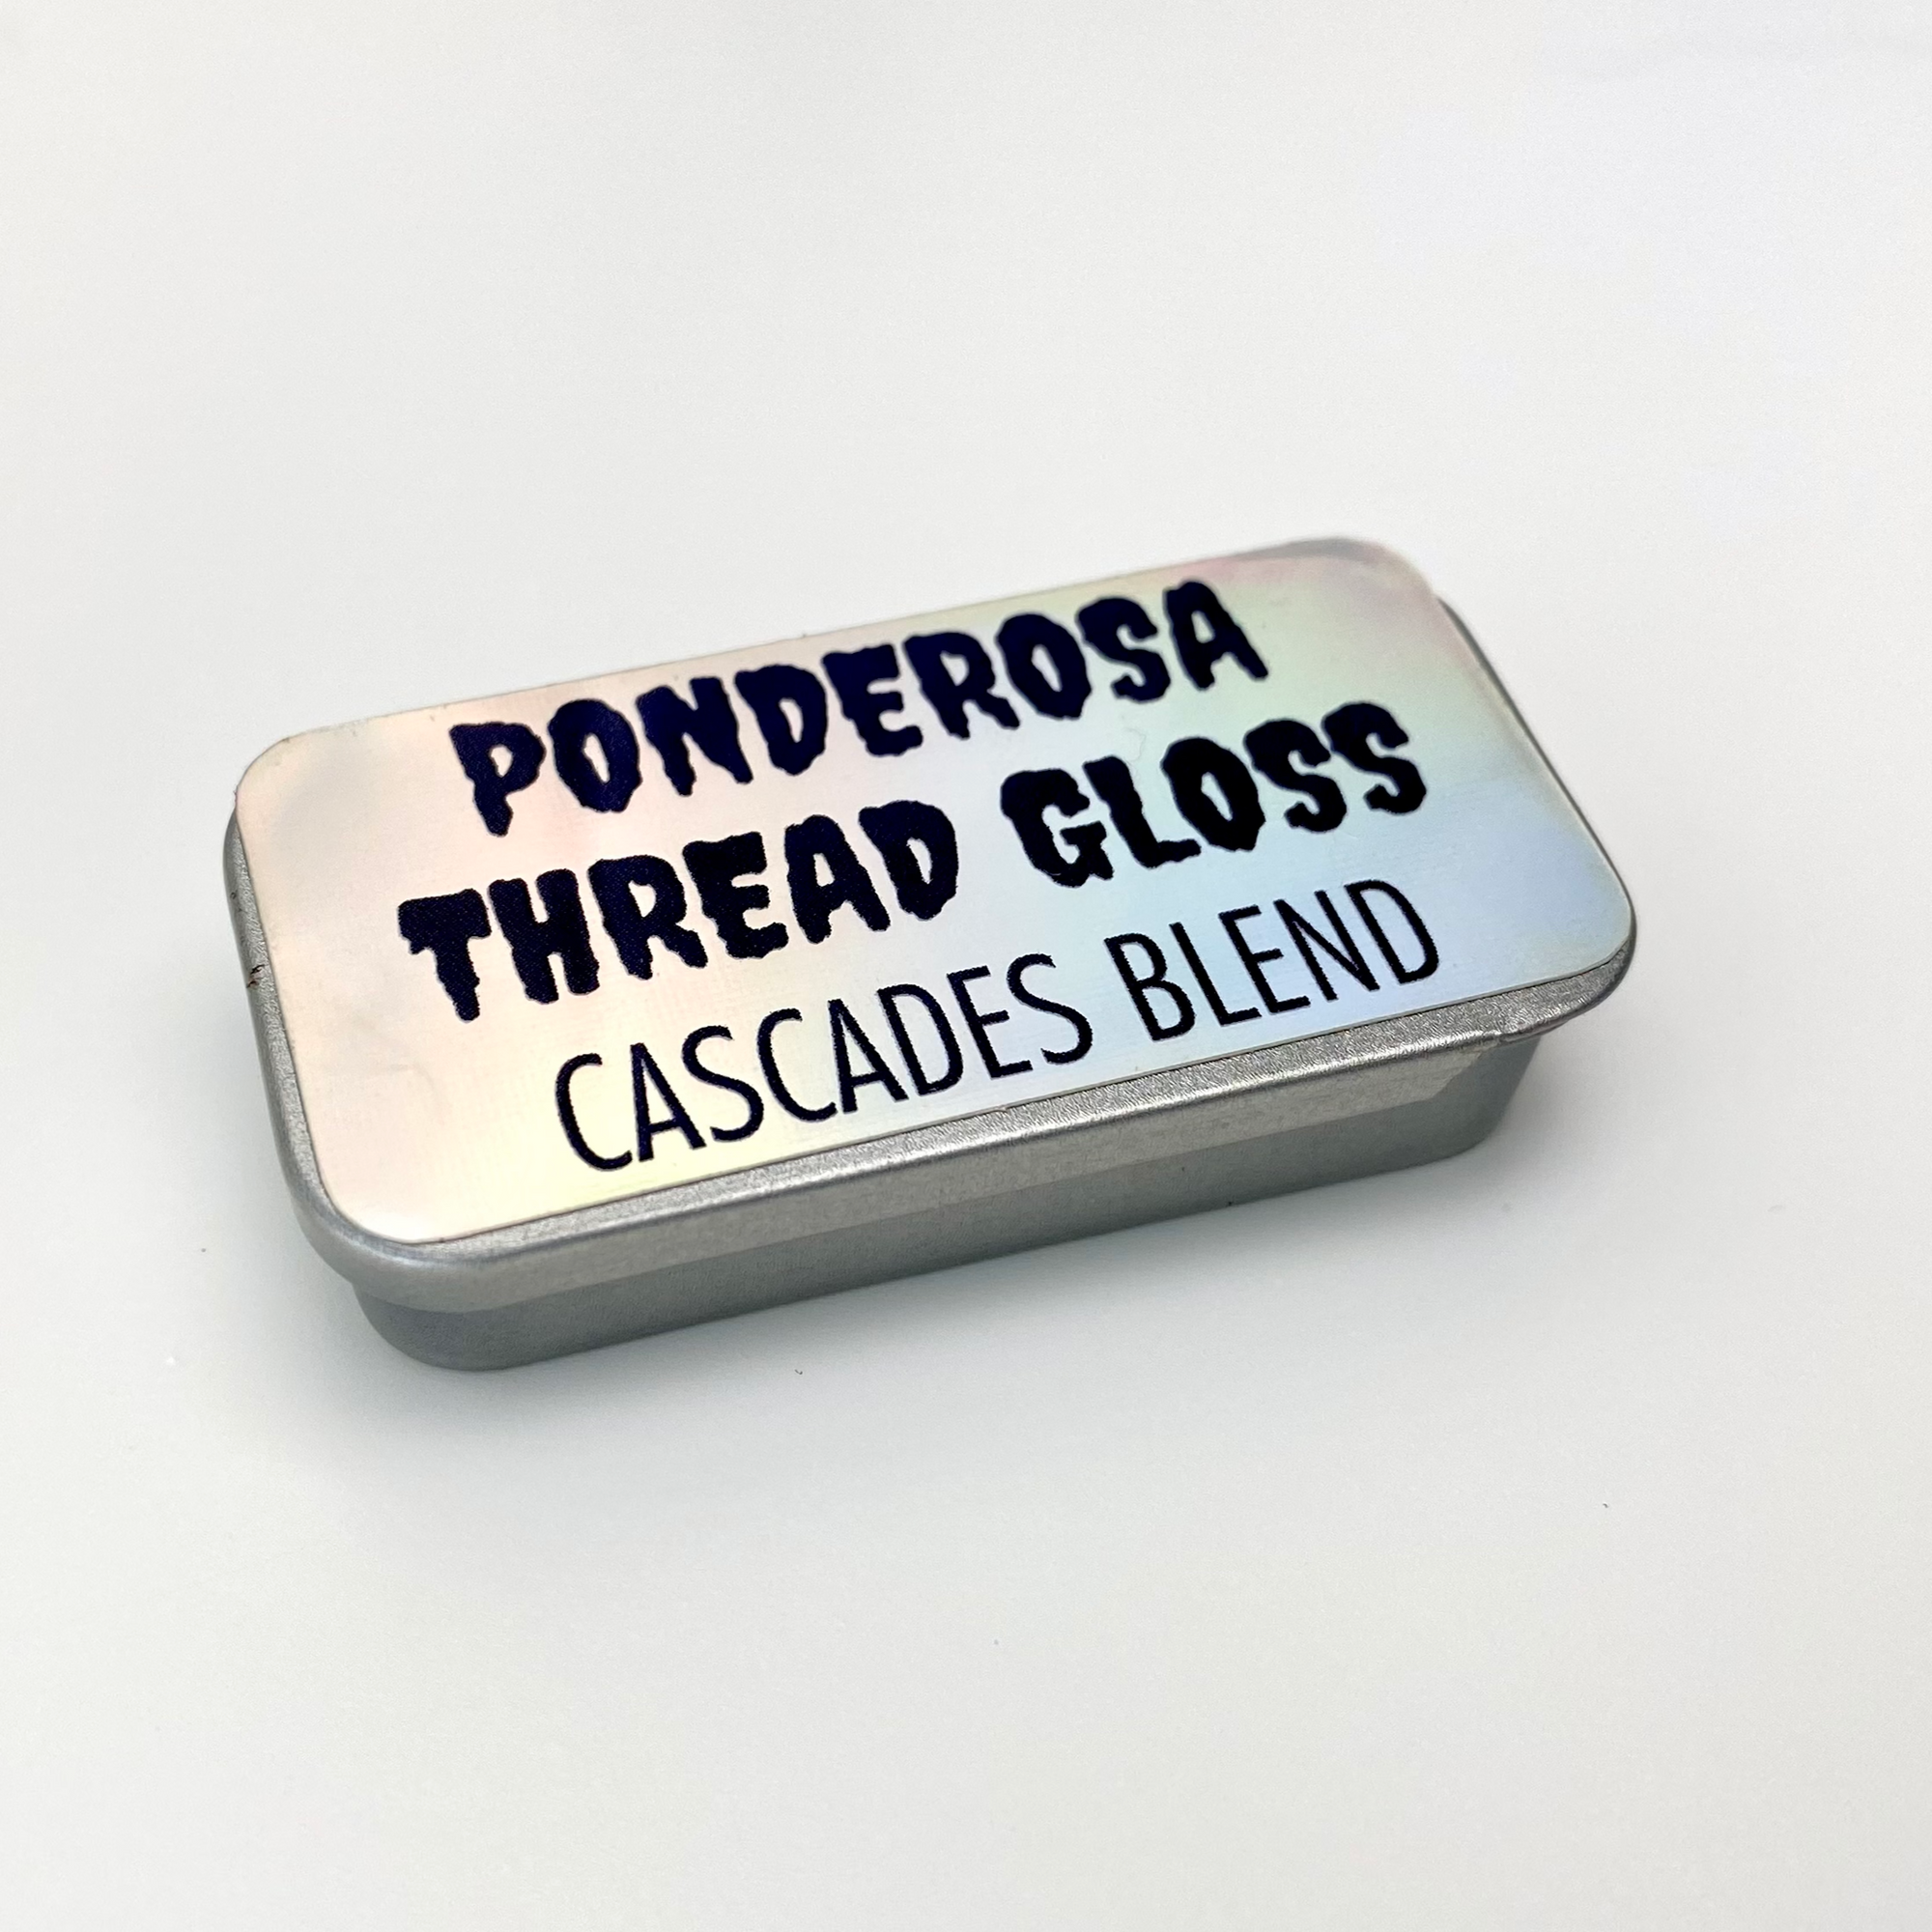 A tin of Ponderosa Thread Gloss - Cascades Blend - against a white background